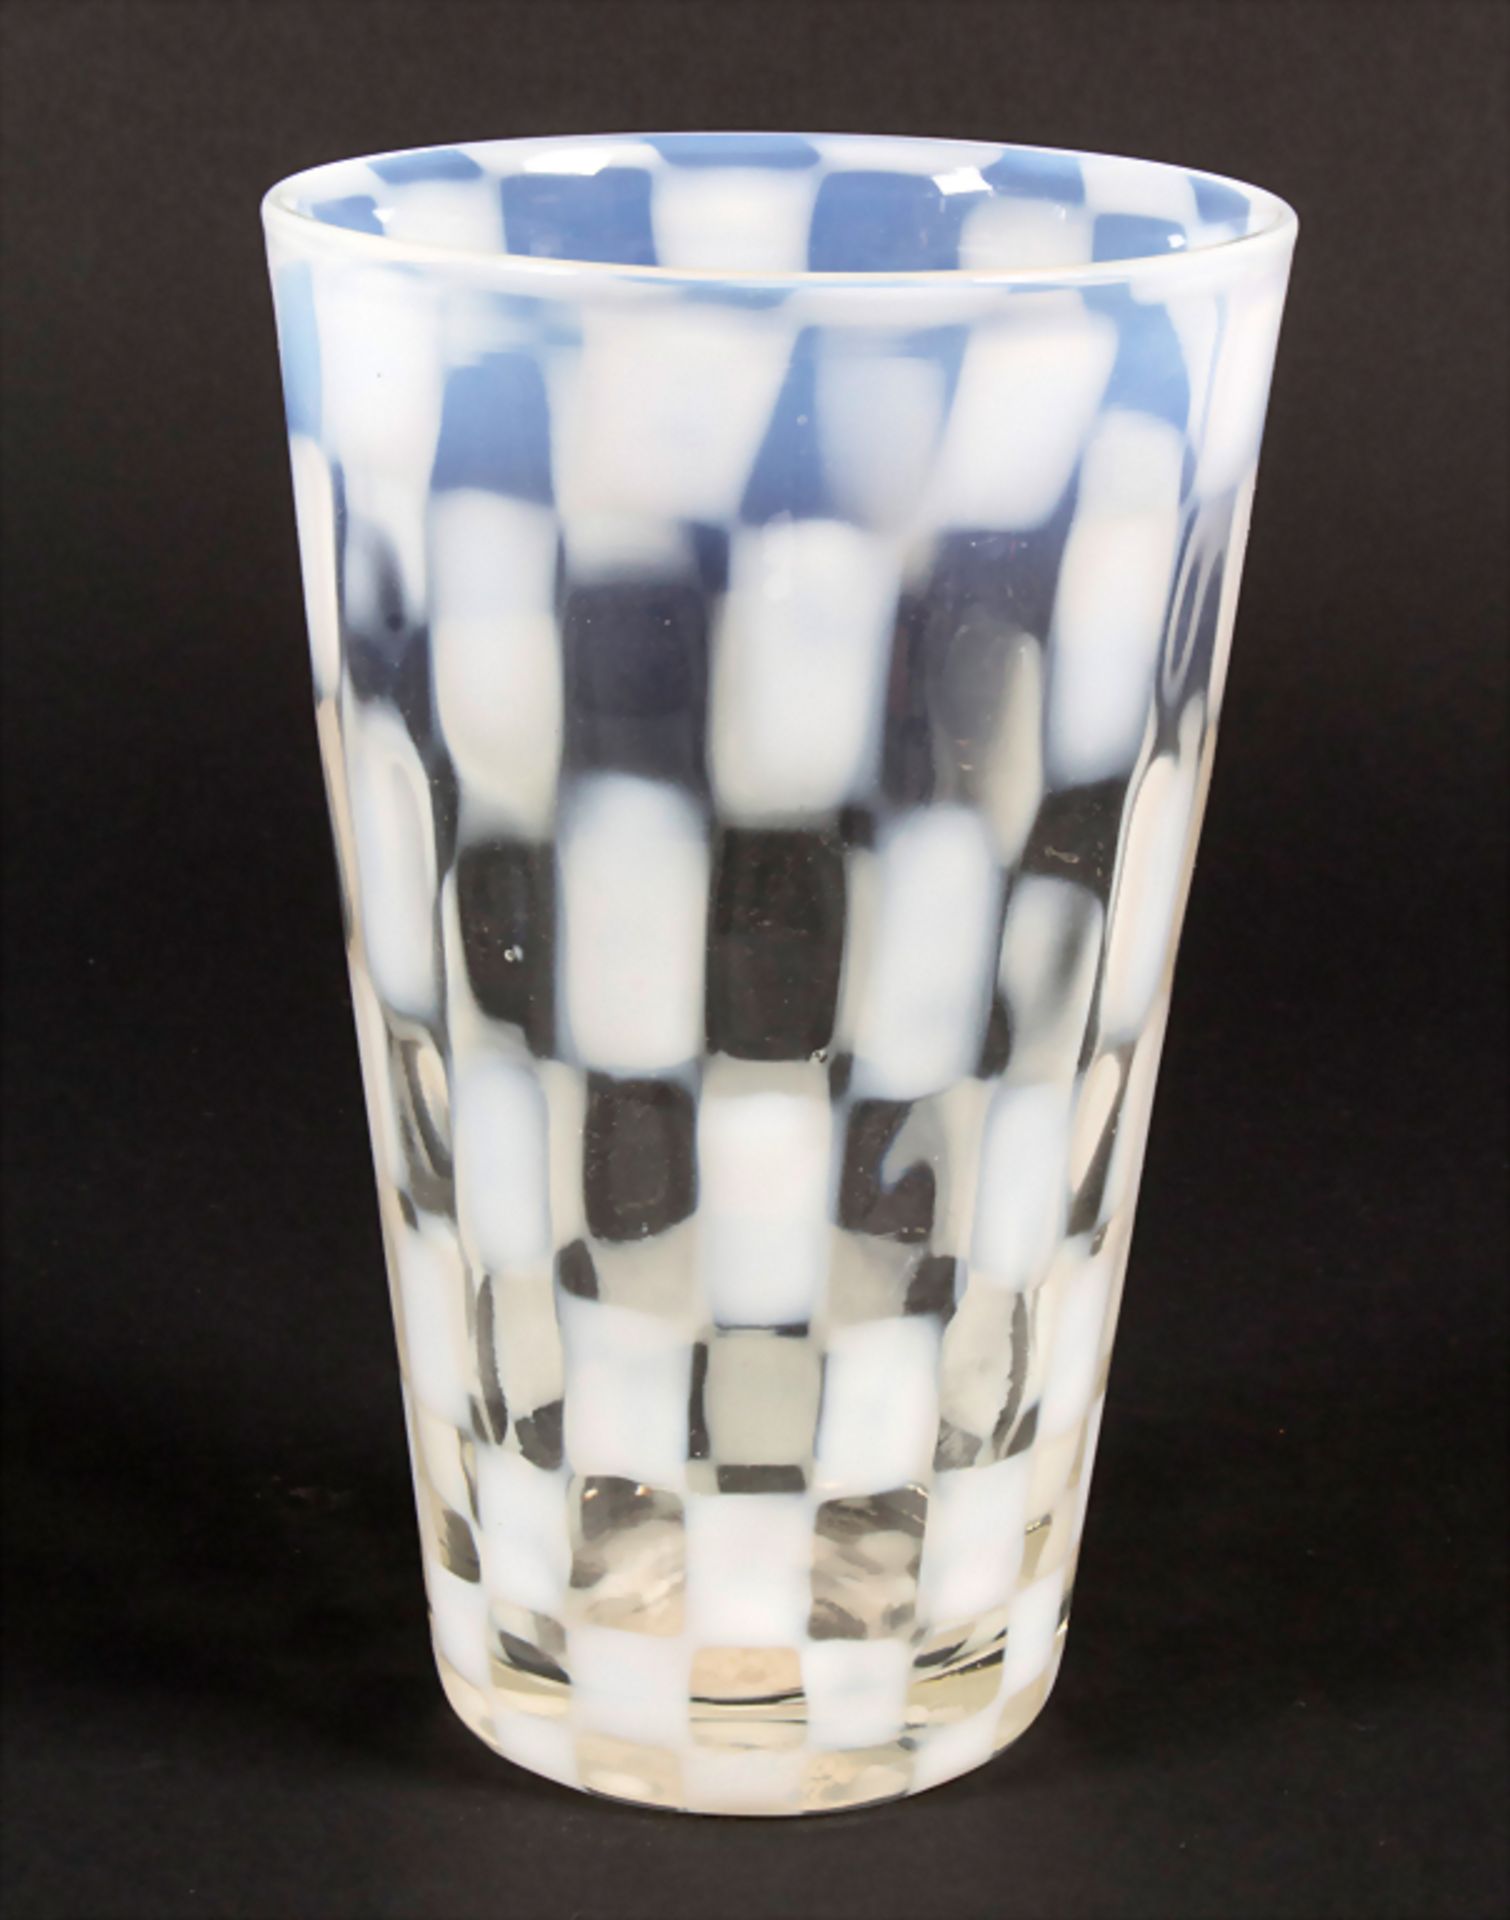 Glasziervase / A decorative glass vase, wohl Brovier & Toso, MuranoMaterial: rauchfarb